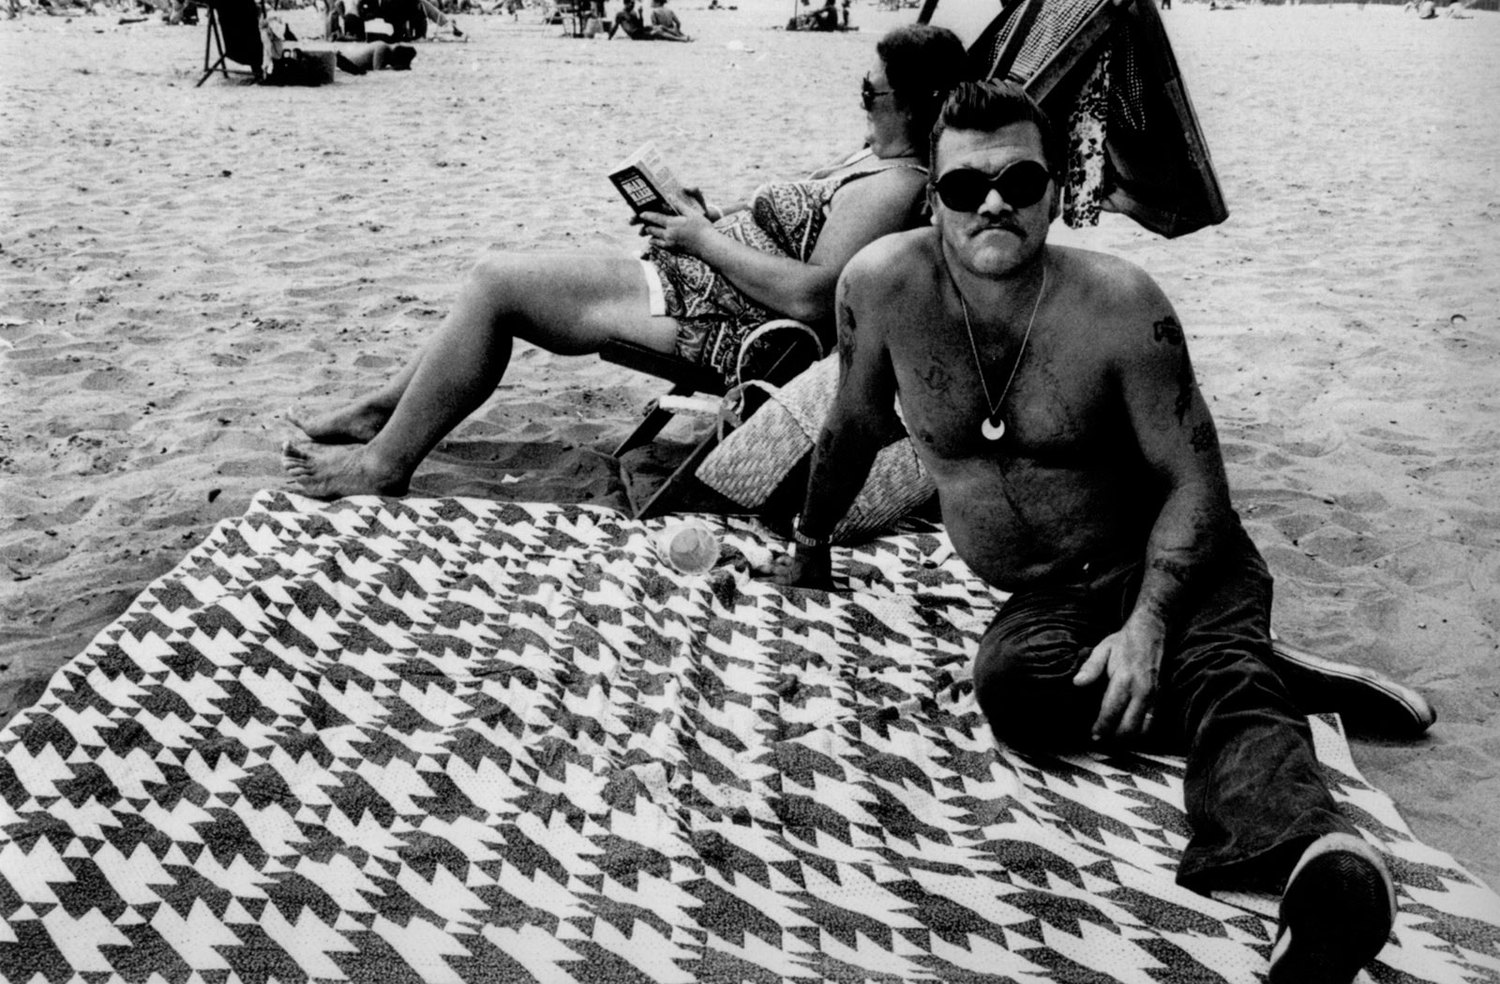 Houndstooth Blanket on Coney Island Beach, New York, 1976